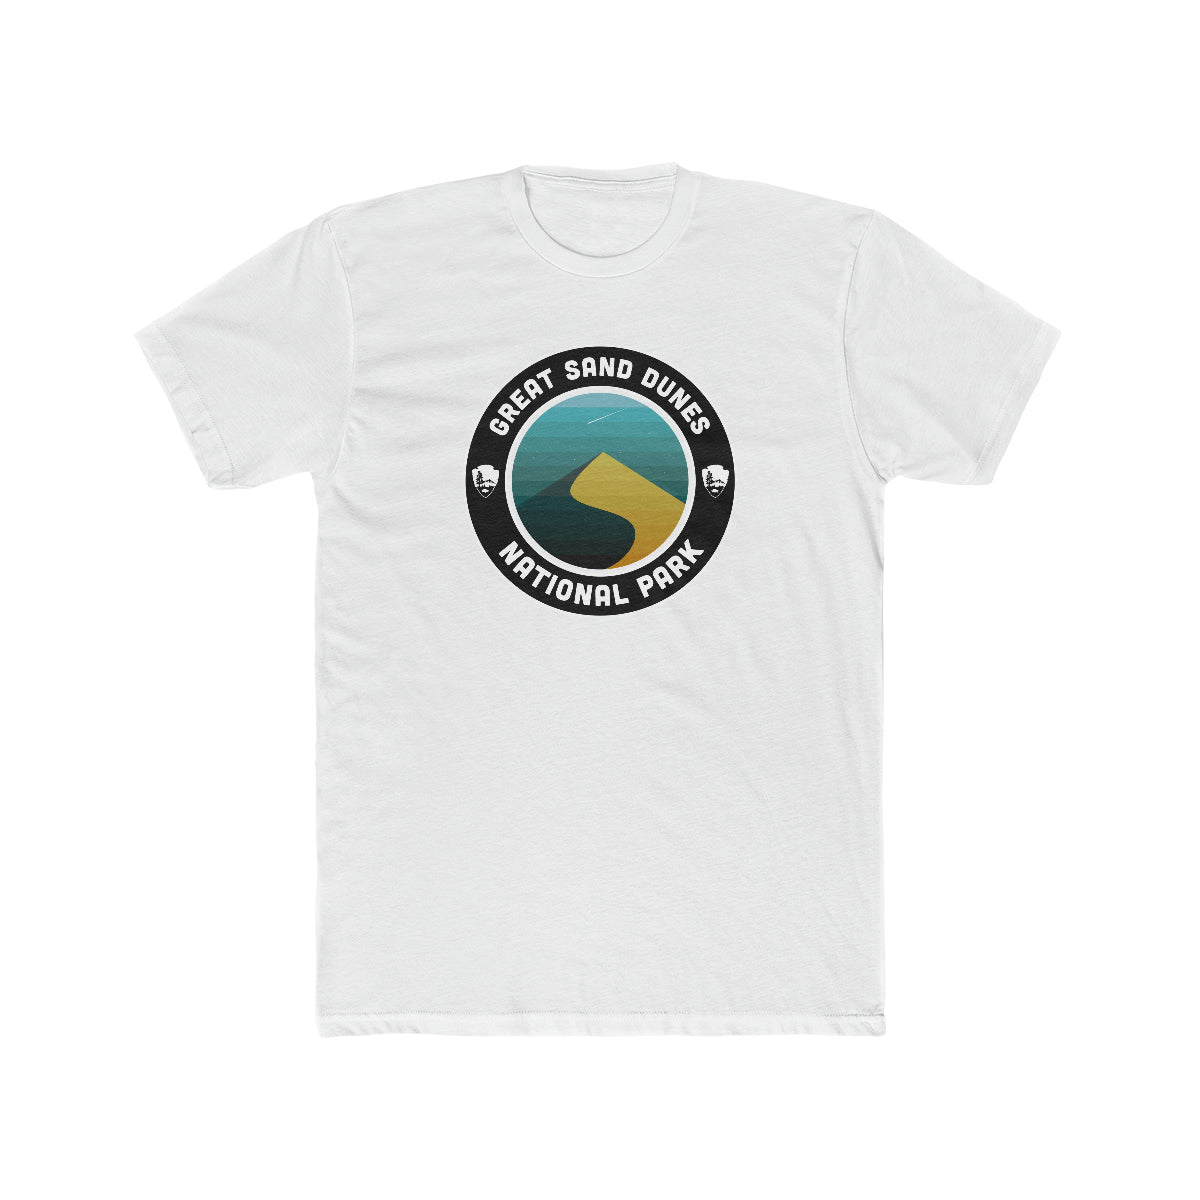 Great Sand Dunes National Park T-Shirt - Round Badge Design